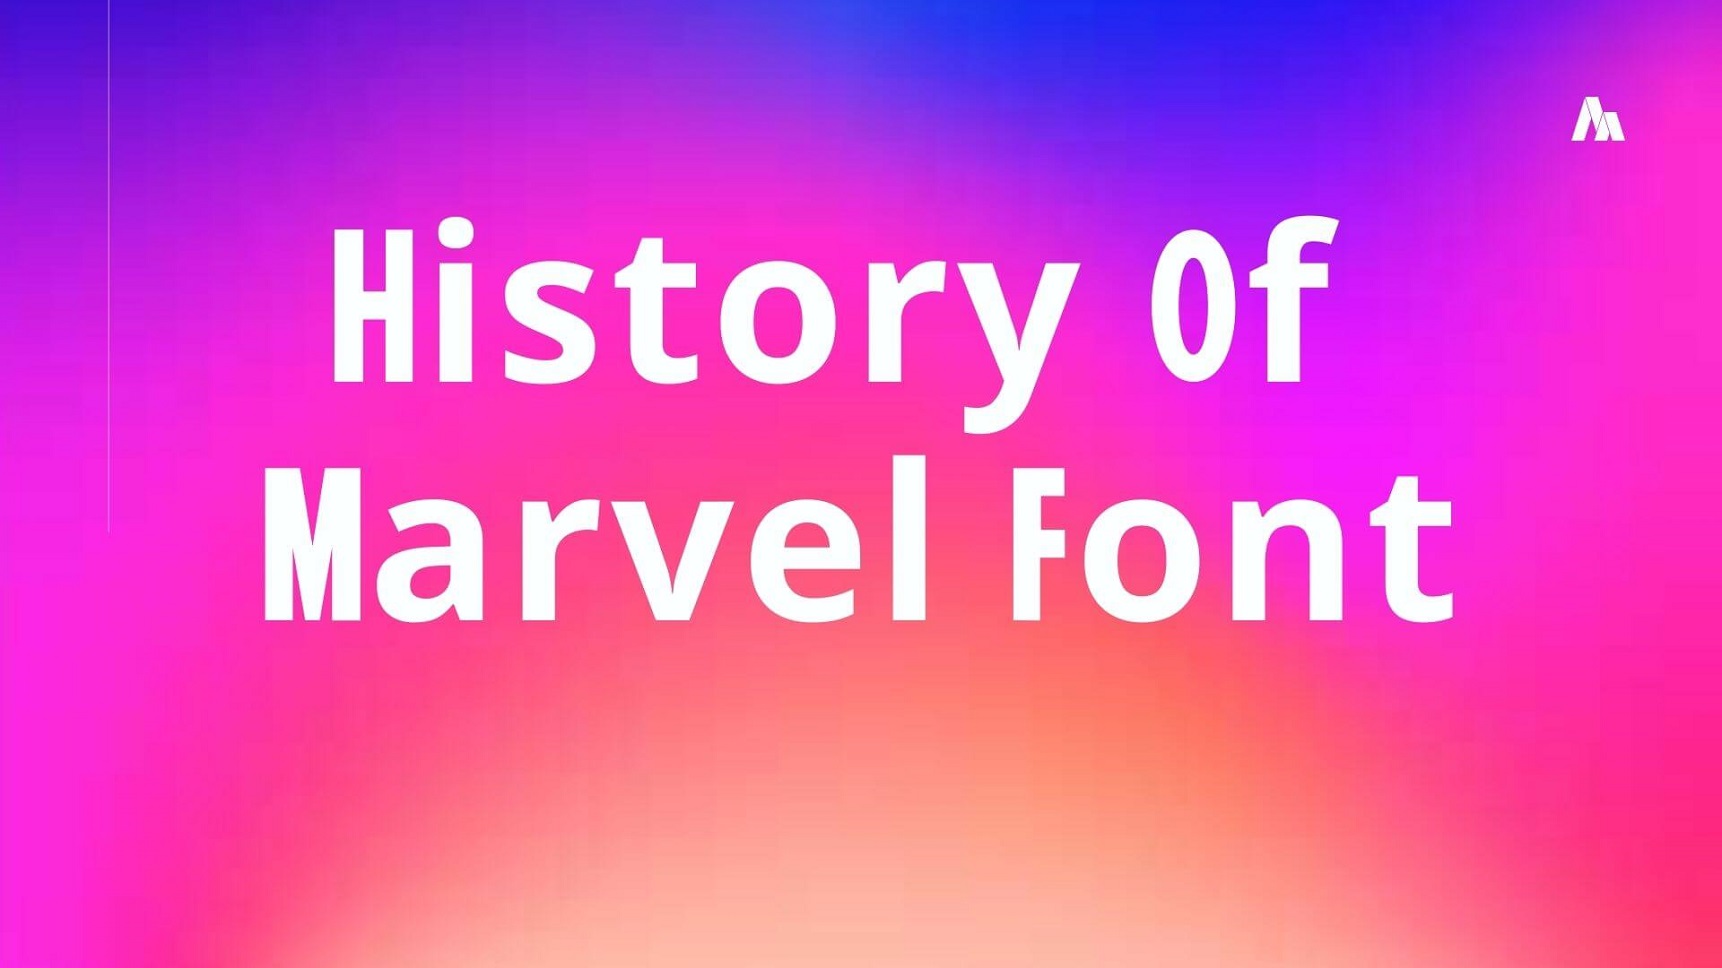 "History of Marvel Font"